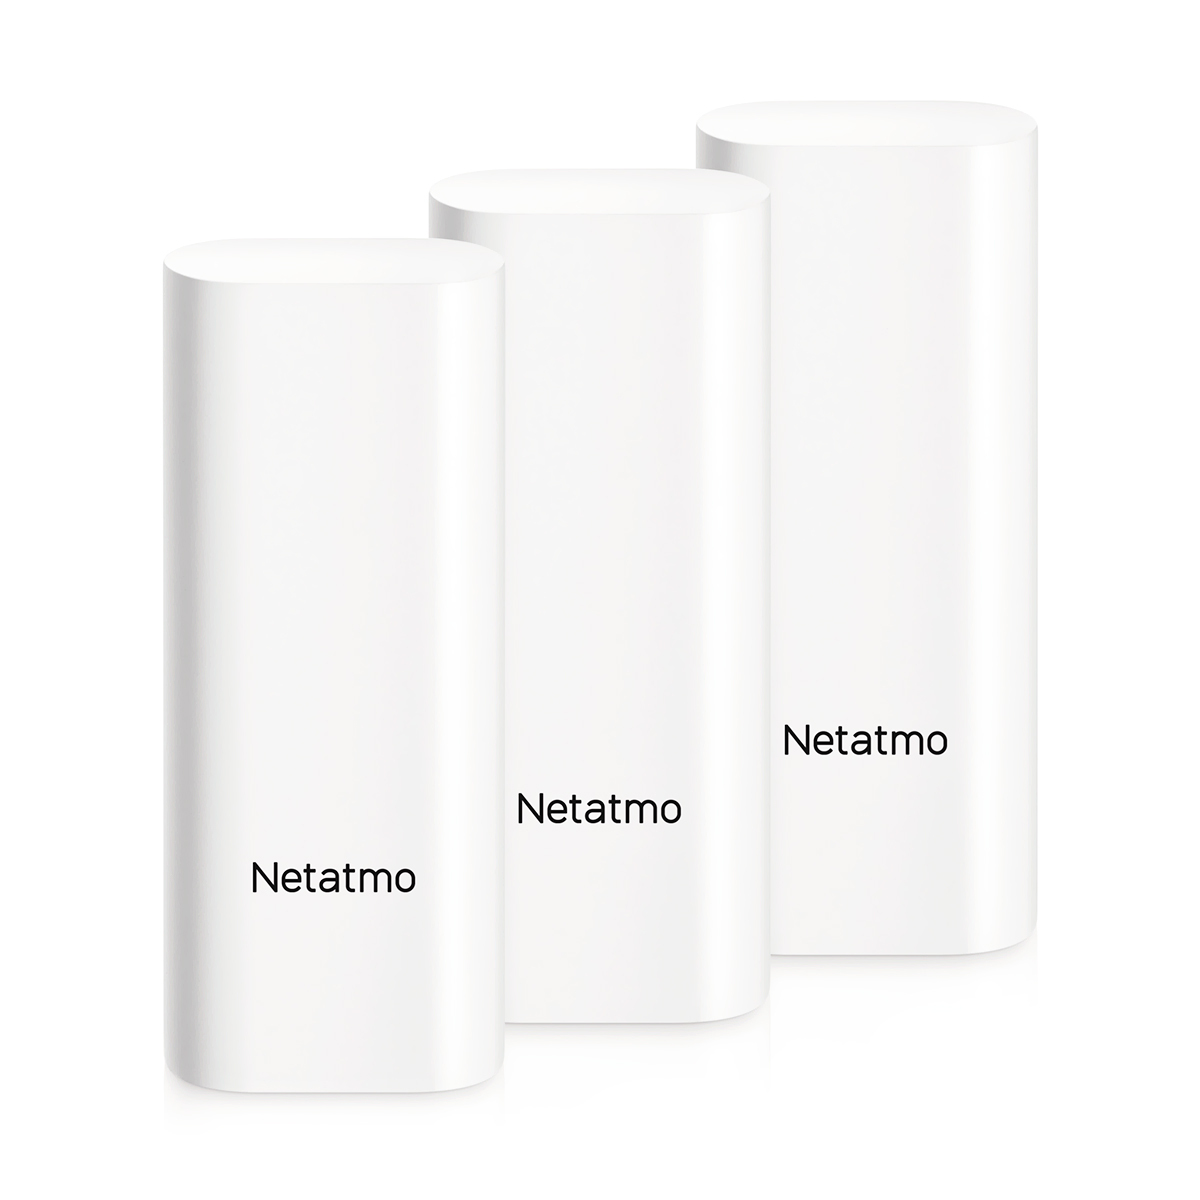 Comprar productos Netatmo